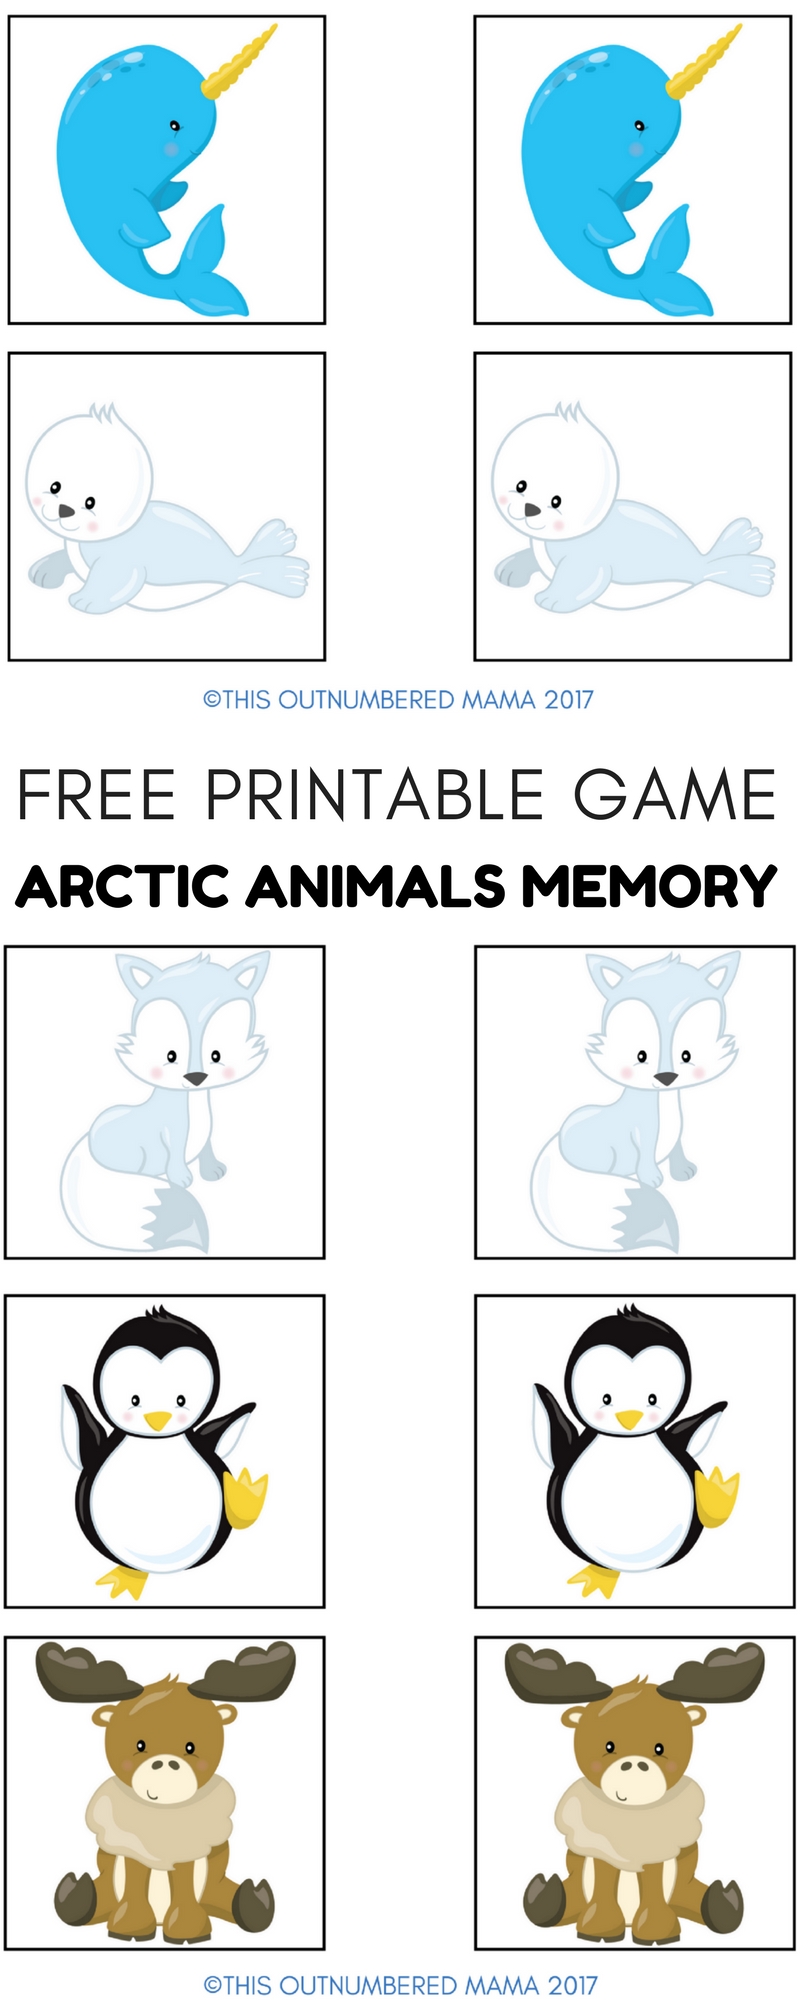 Free Printable Arctic Animals Memory Game for Arctic Animal Unit Studies! #homeschooling #ihsnet #kidsactivities #freeprintable #printables #homeschoolprintables #unitstudy 